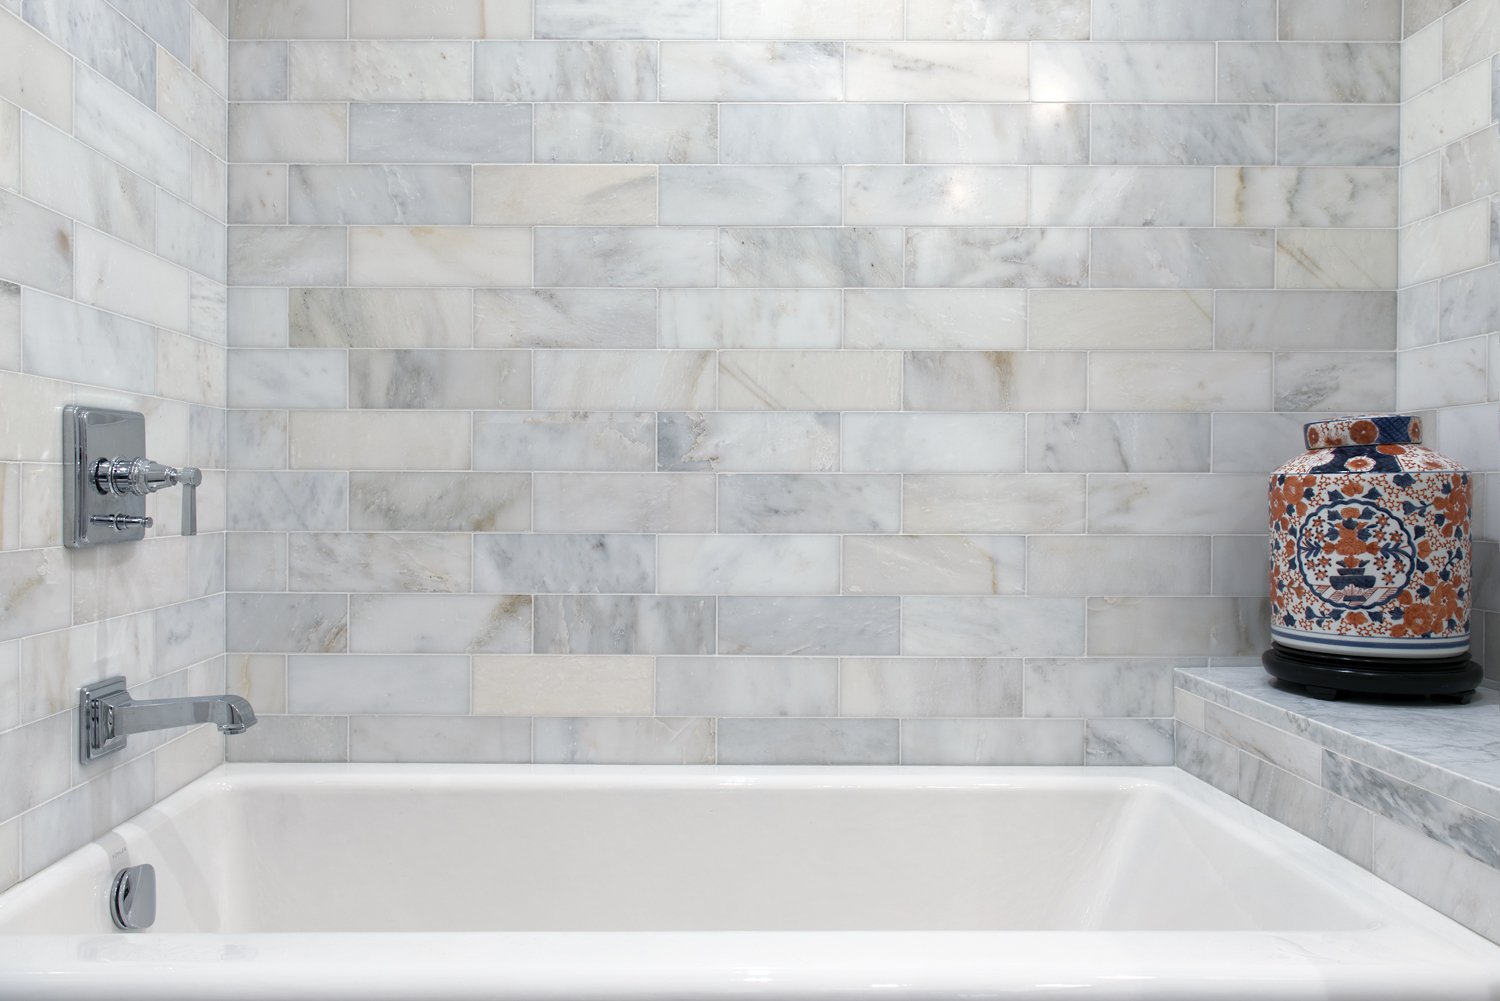  Bathtub with tiled walls.  